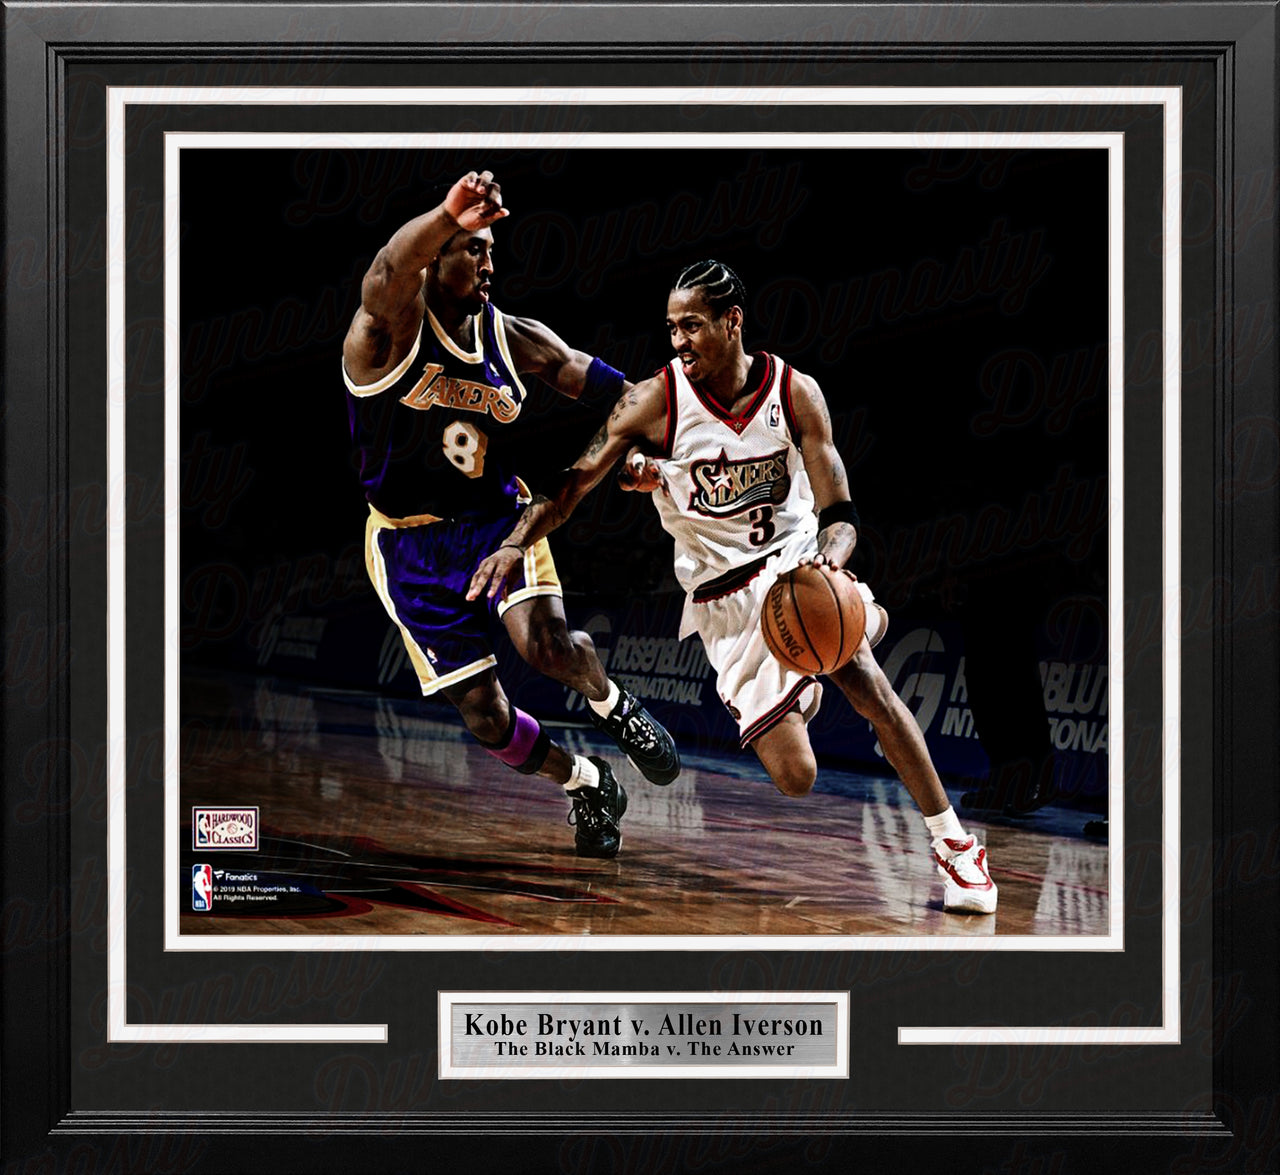 Kobe Bryant v. Allen Iverson Framed NBA Basketball Legends Photo - Dynasty Sports & Framing 